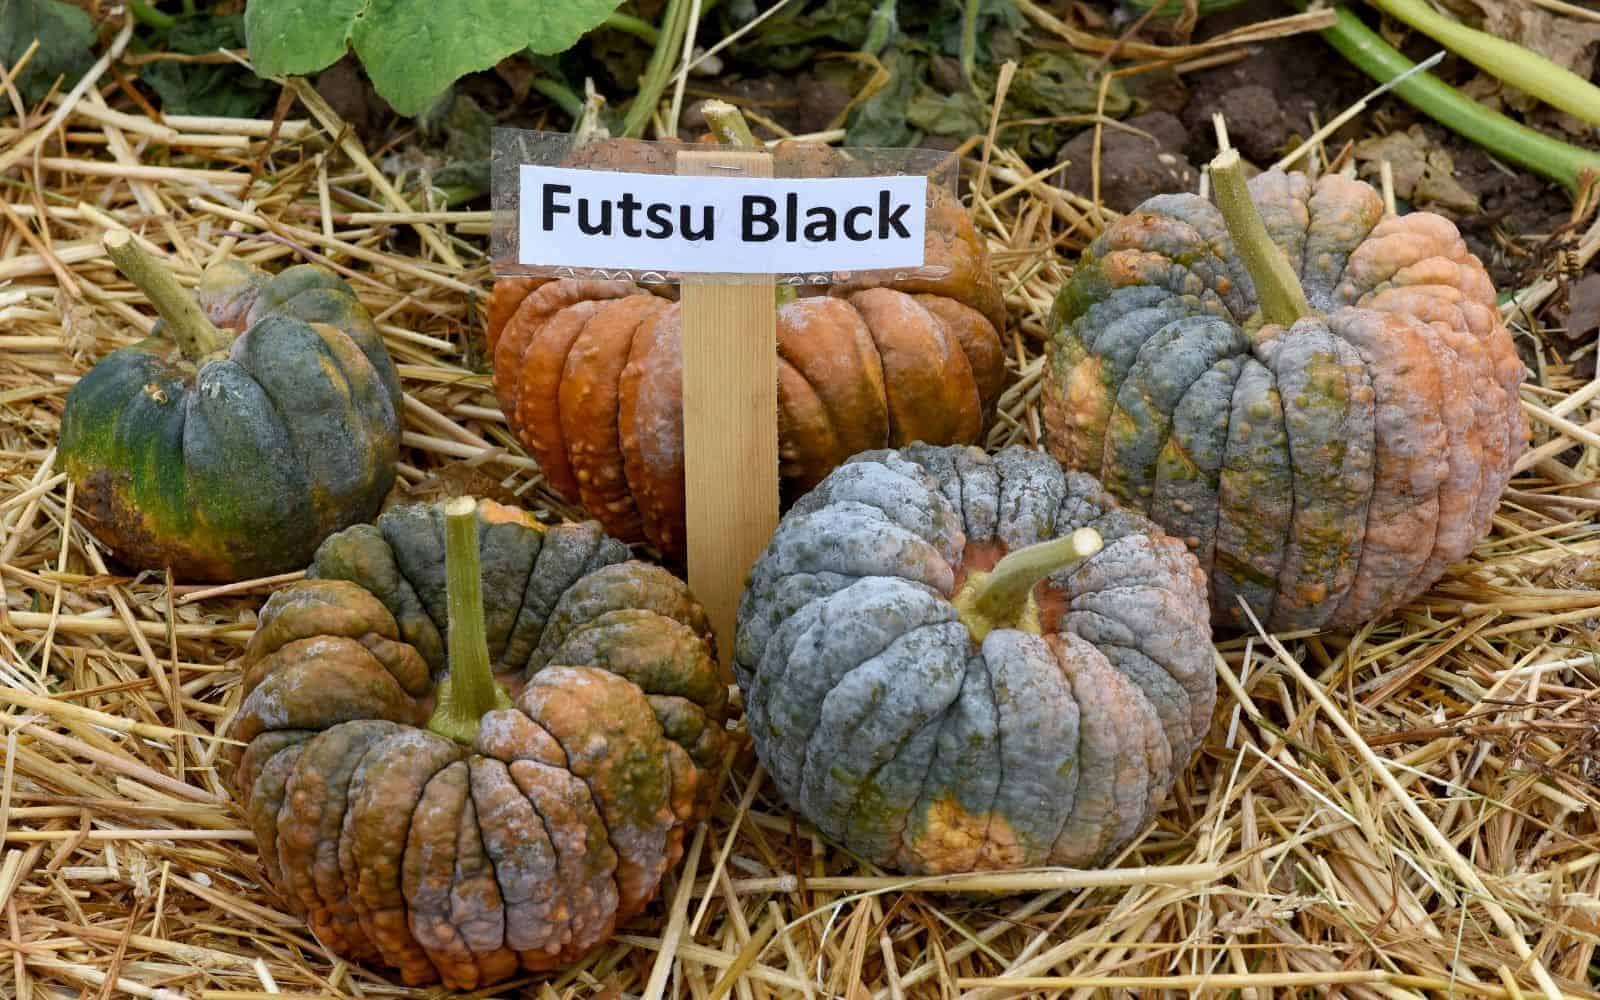 Futsu black pumpkins